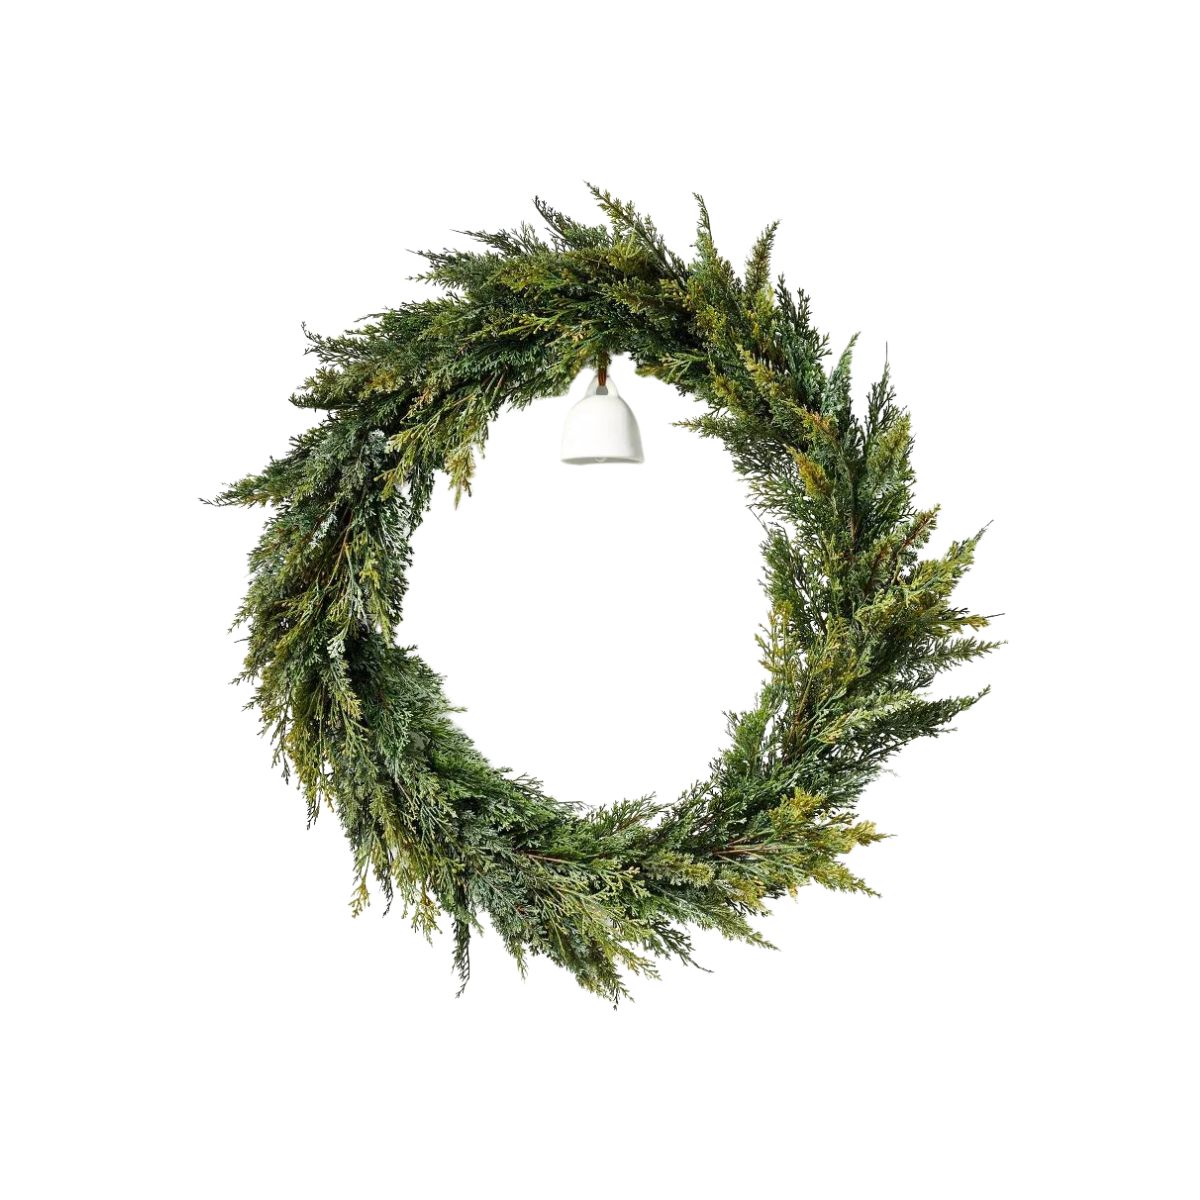 greenery Christmas decorations wreath